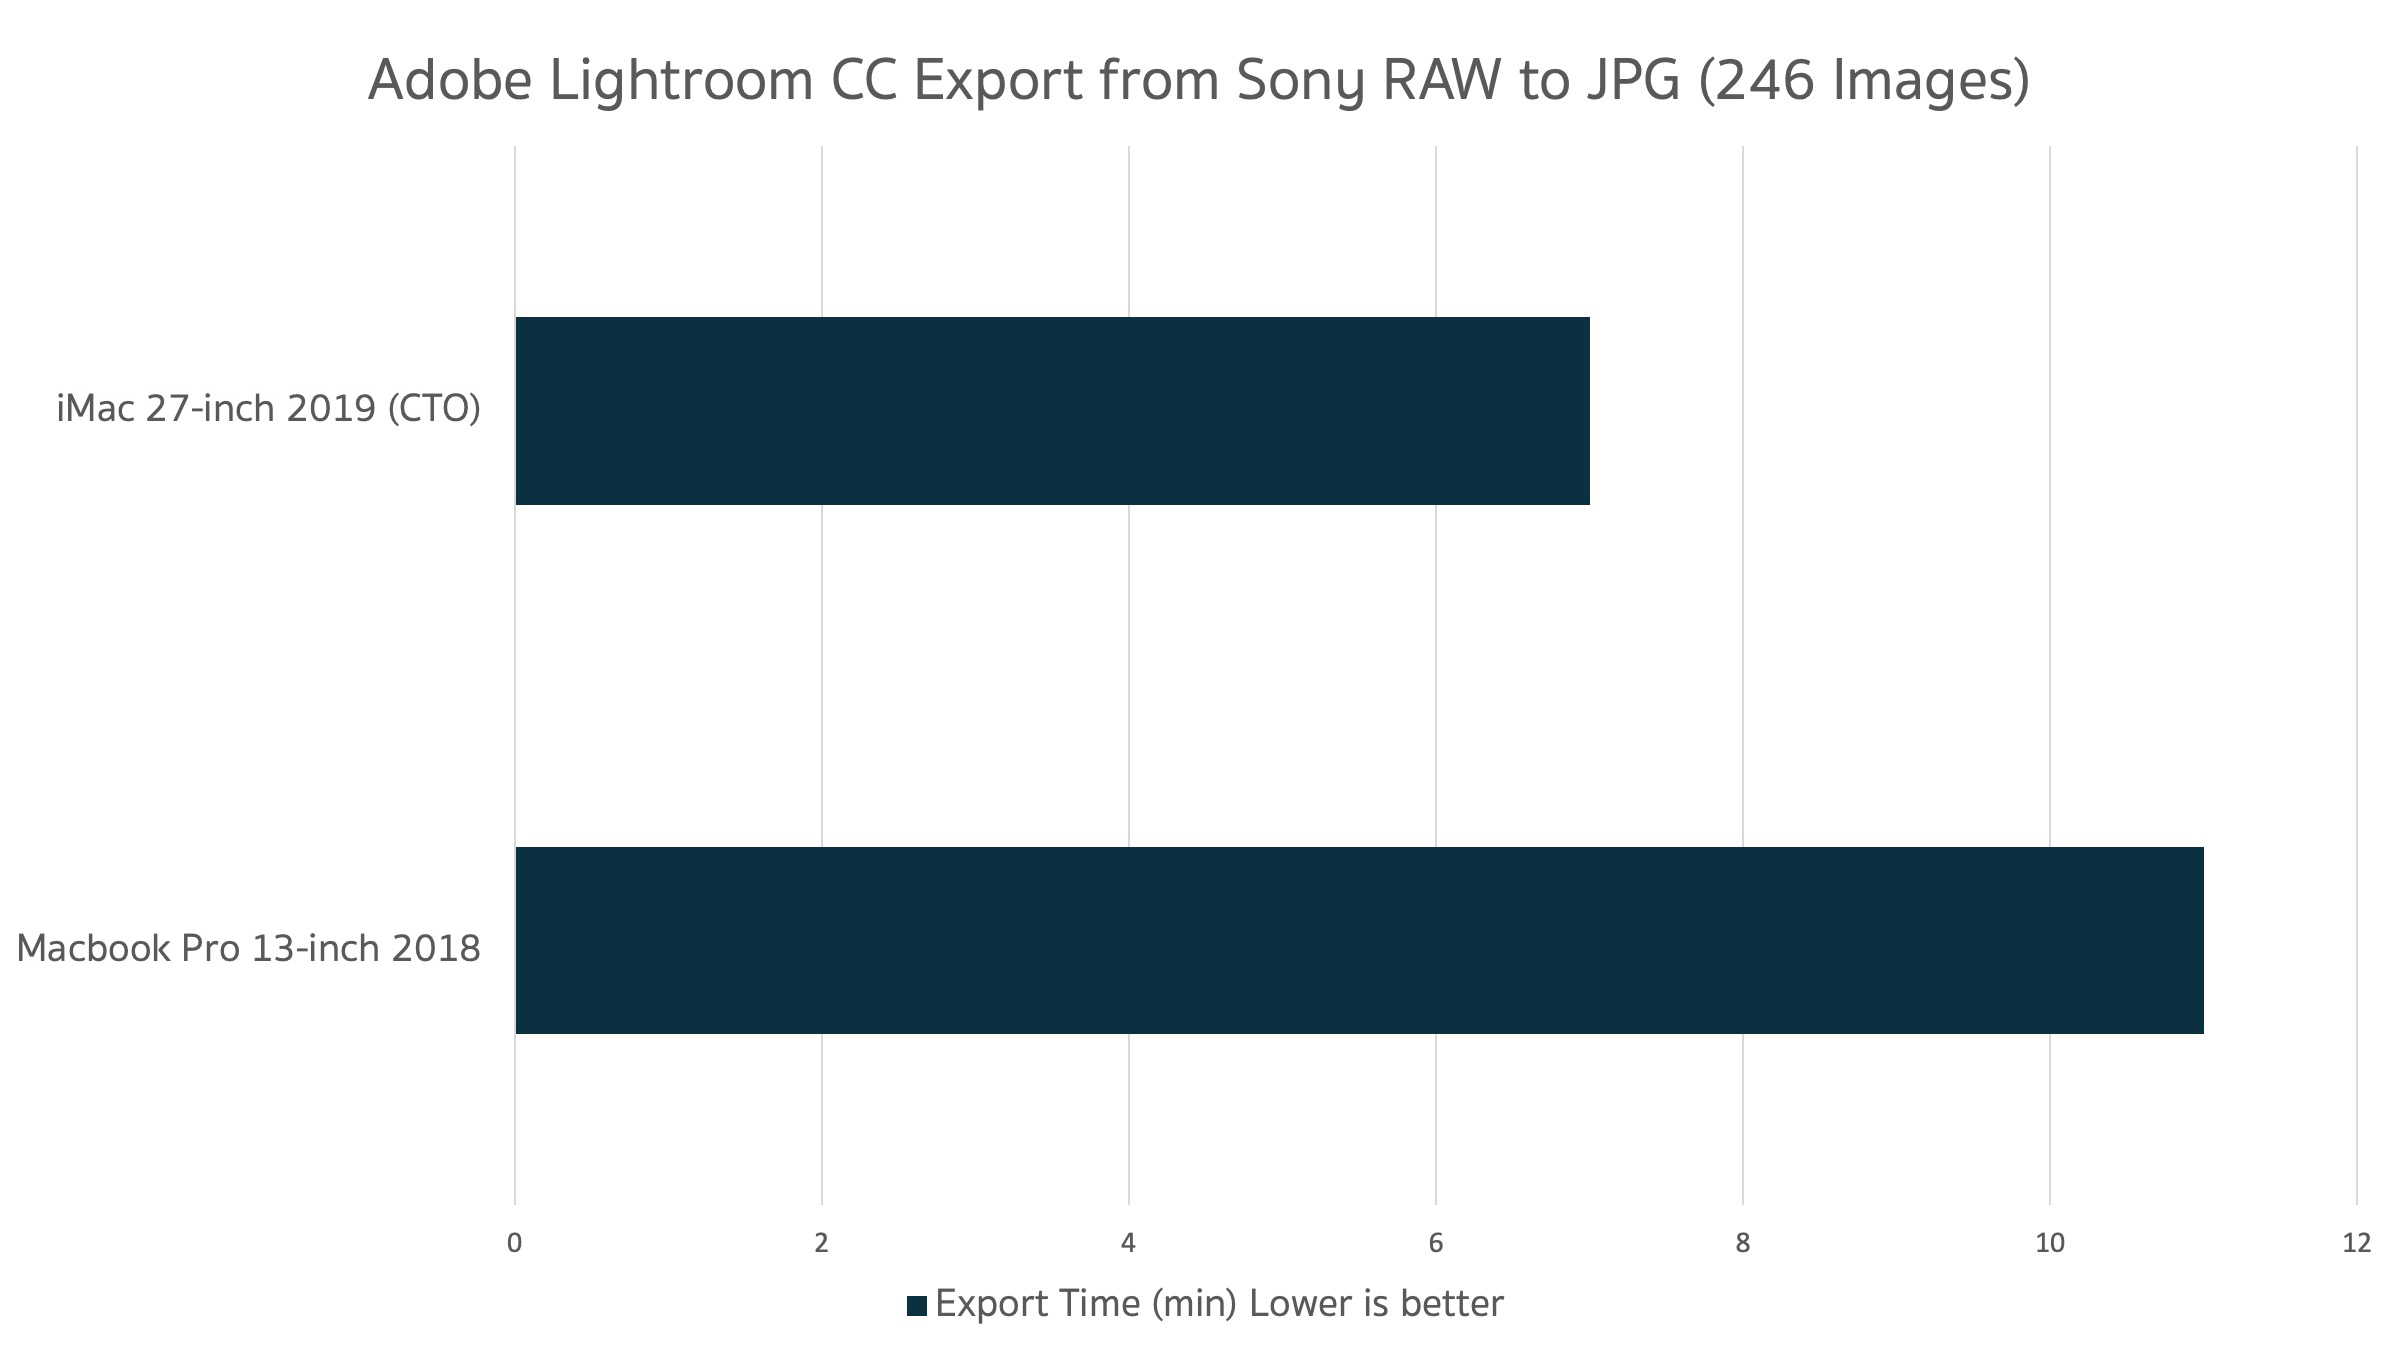 Compare Adobe Lightroom CC Export Time